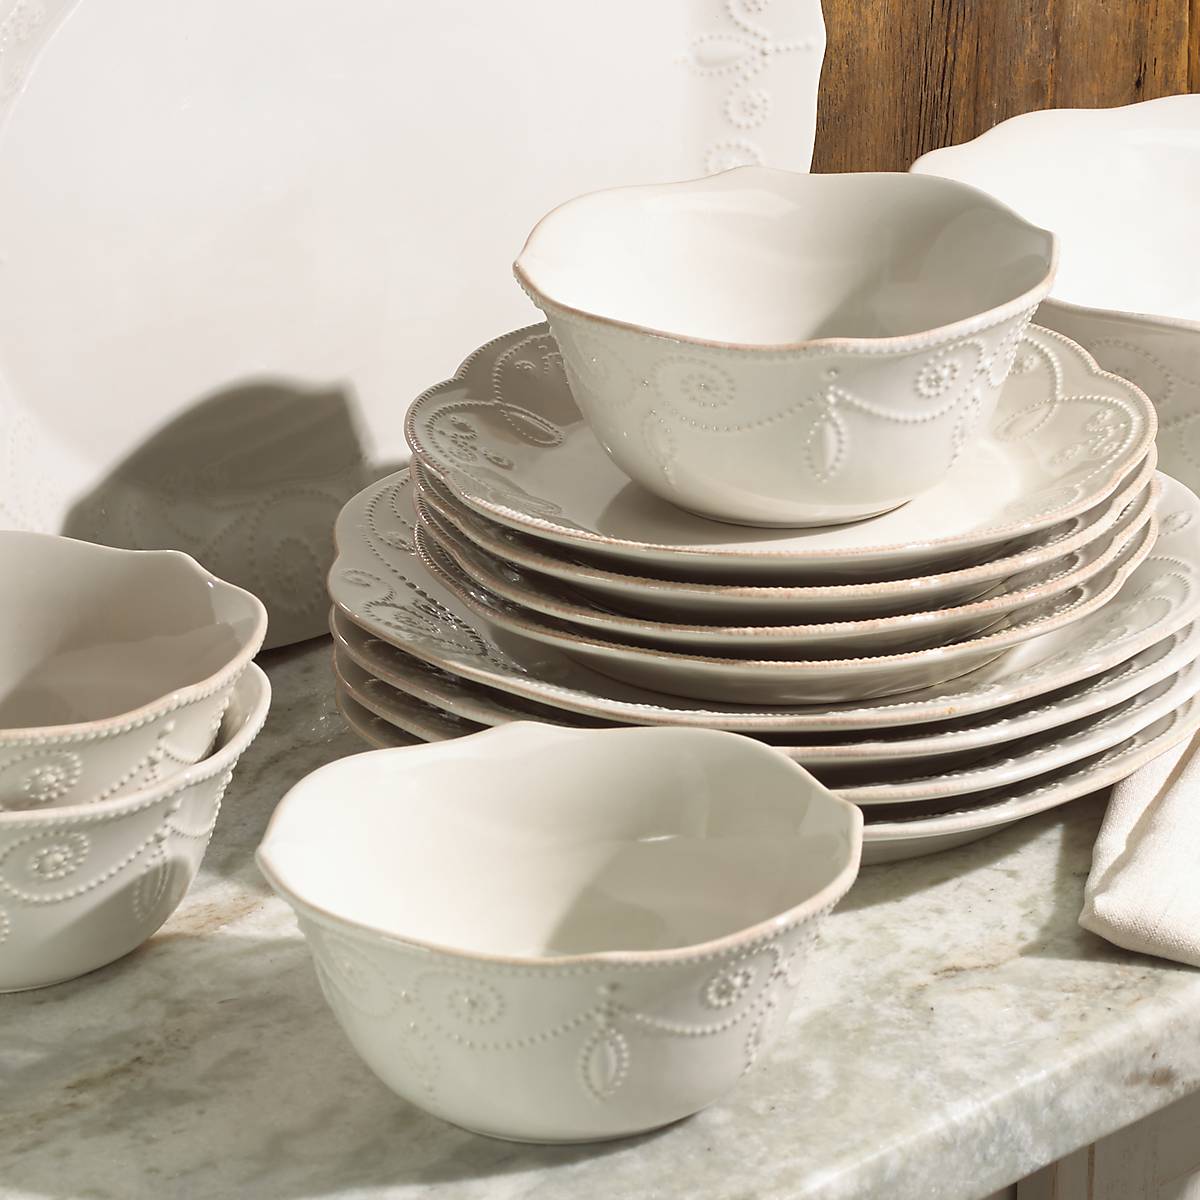 20 Stoneware plate ideas  ceramic plates, stoneware, tableware